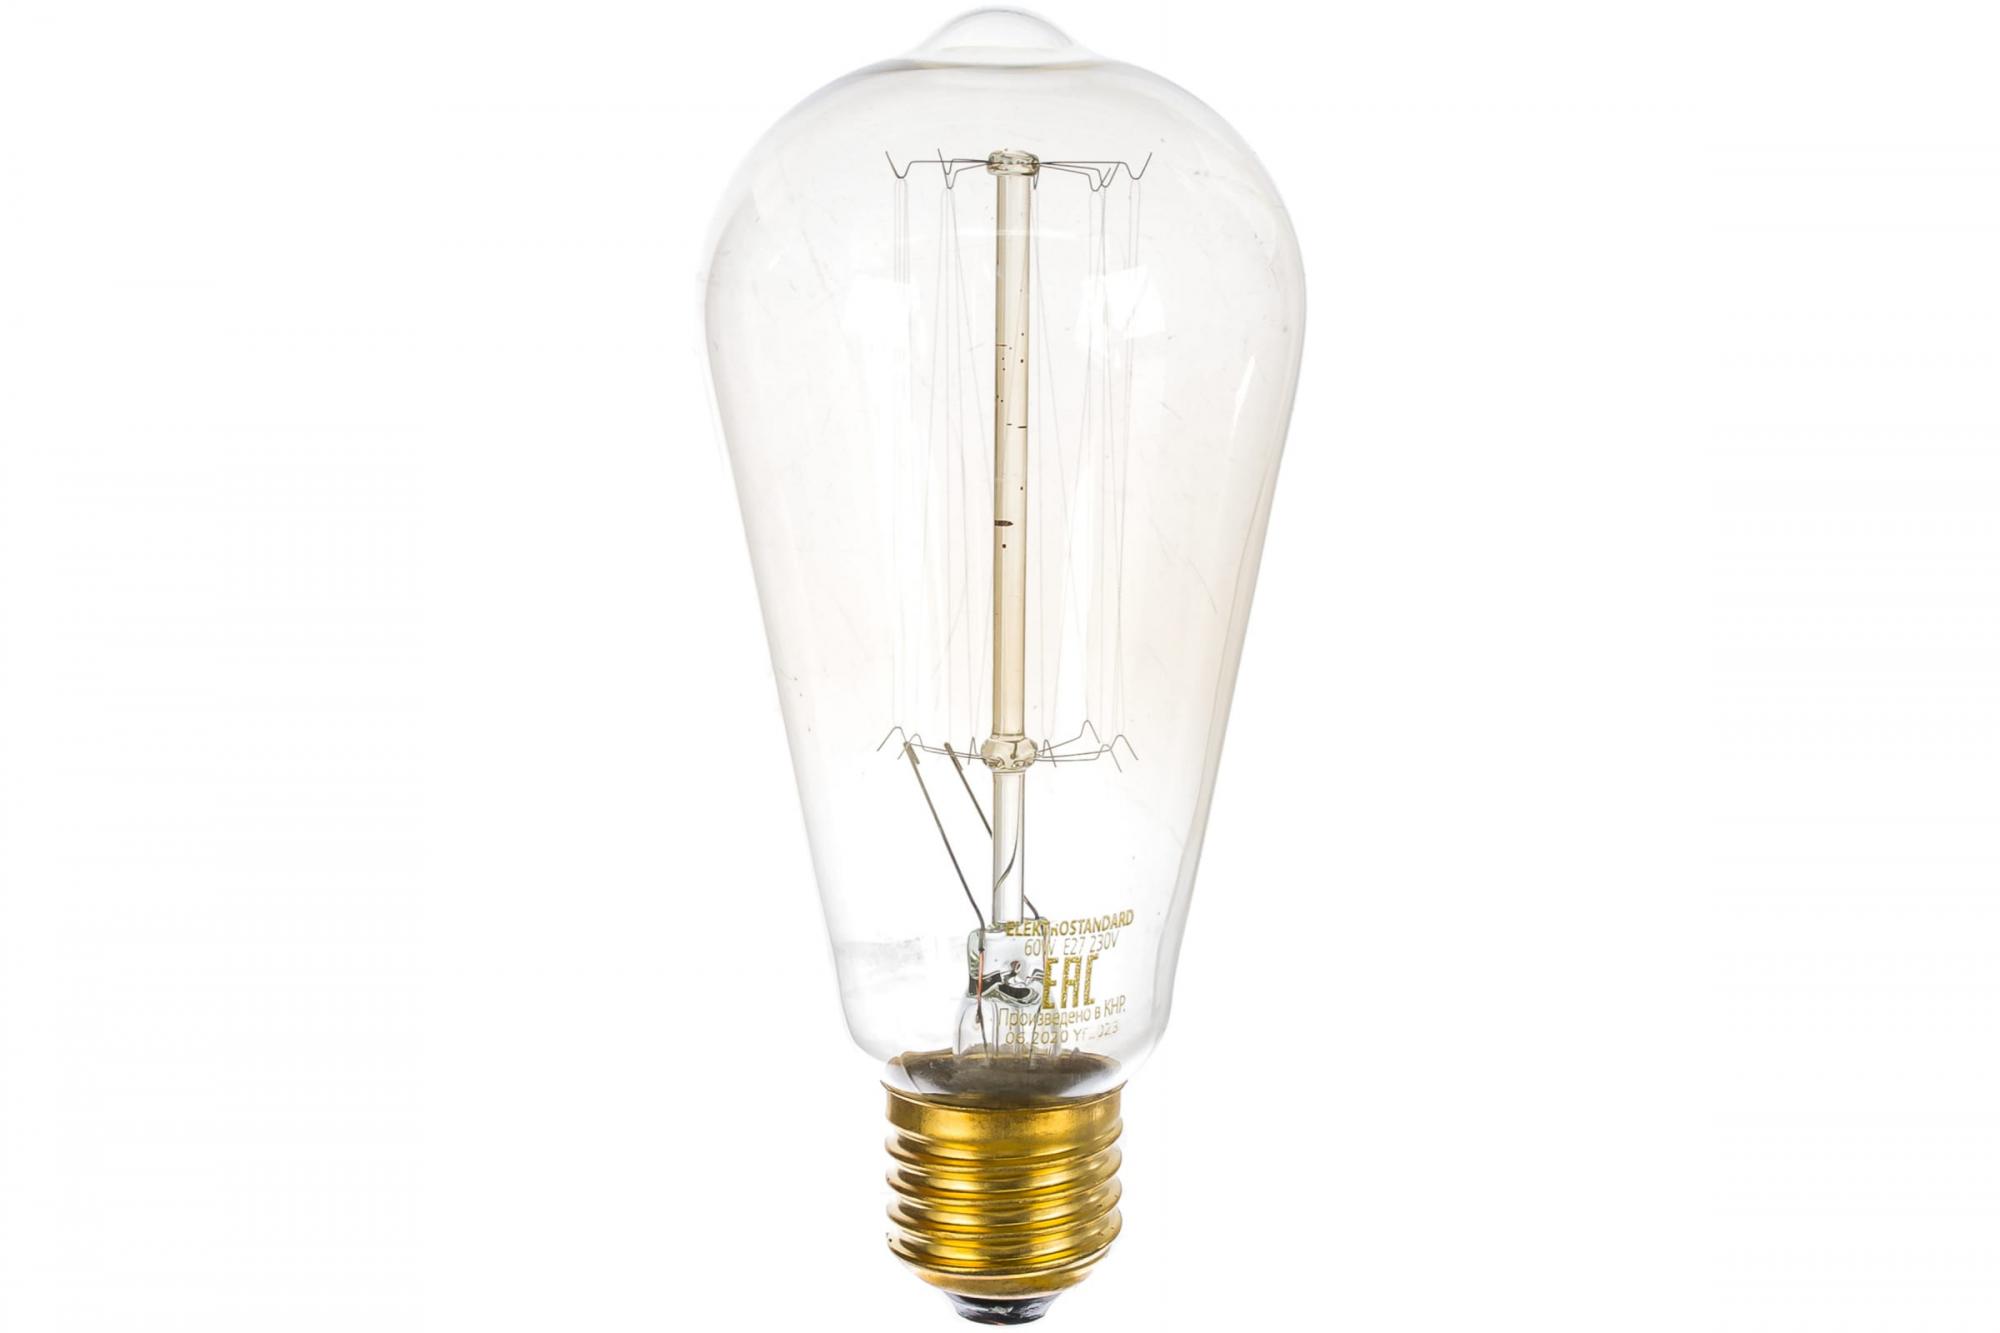 Elektrostandard - st64 60w. Лампа Elektrostandard st64 60w. Лампа накаливания Elektrostandard Эдисон st64. H2-130002, лампа накаливания 110-130в, 2.60Вт (obsolete). Лампочки купить в екатеринбурге